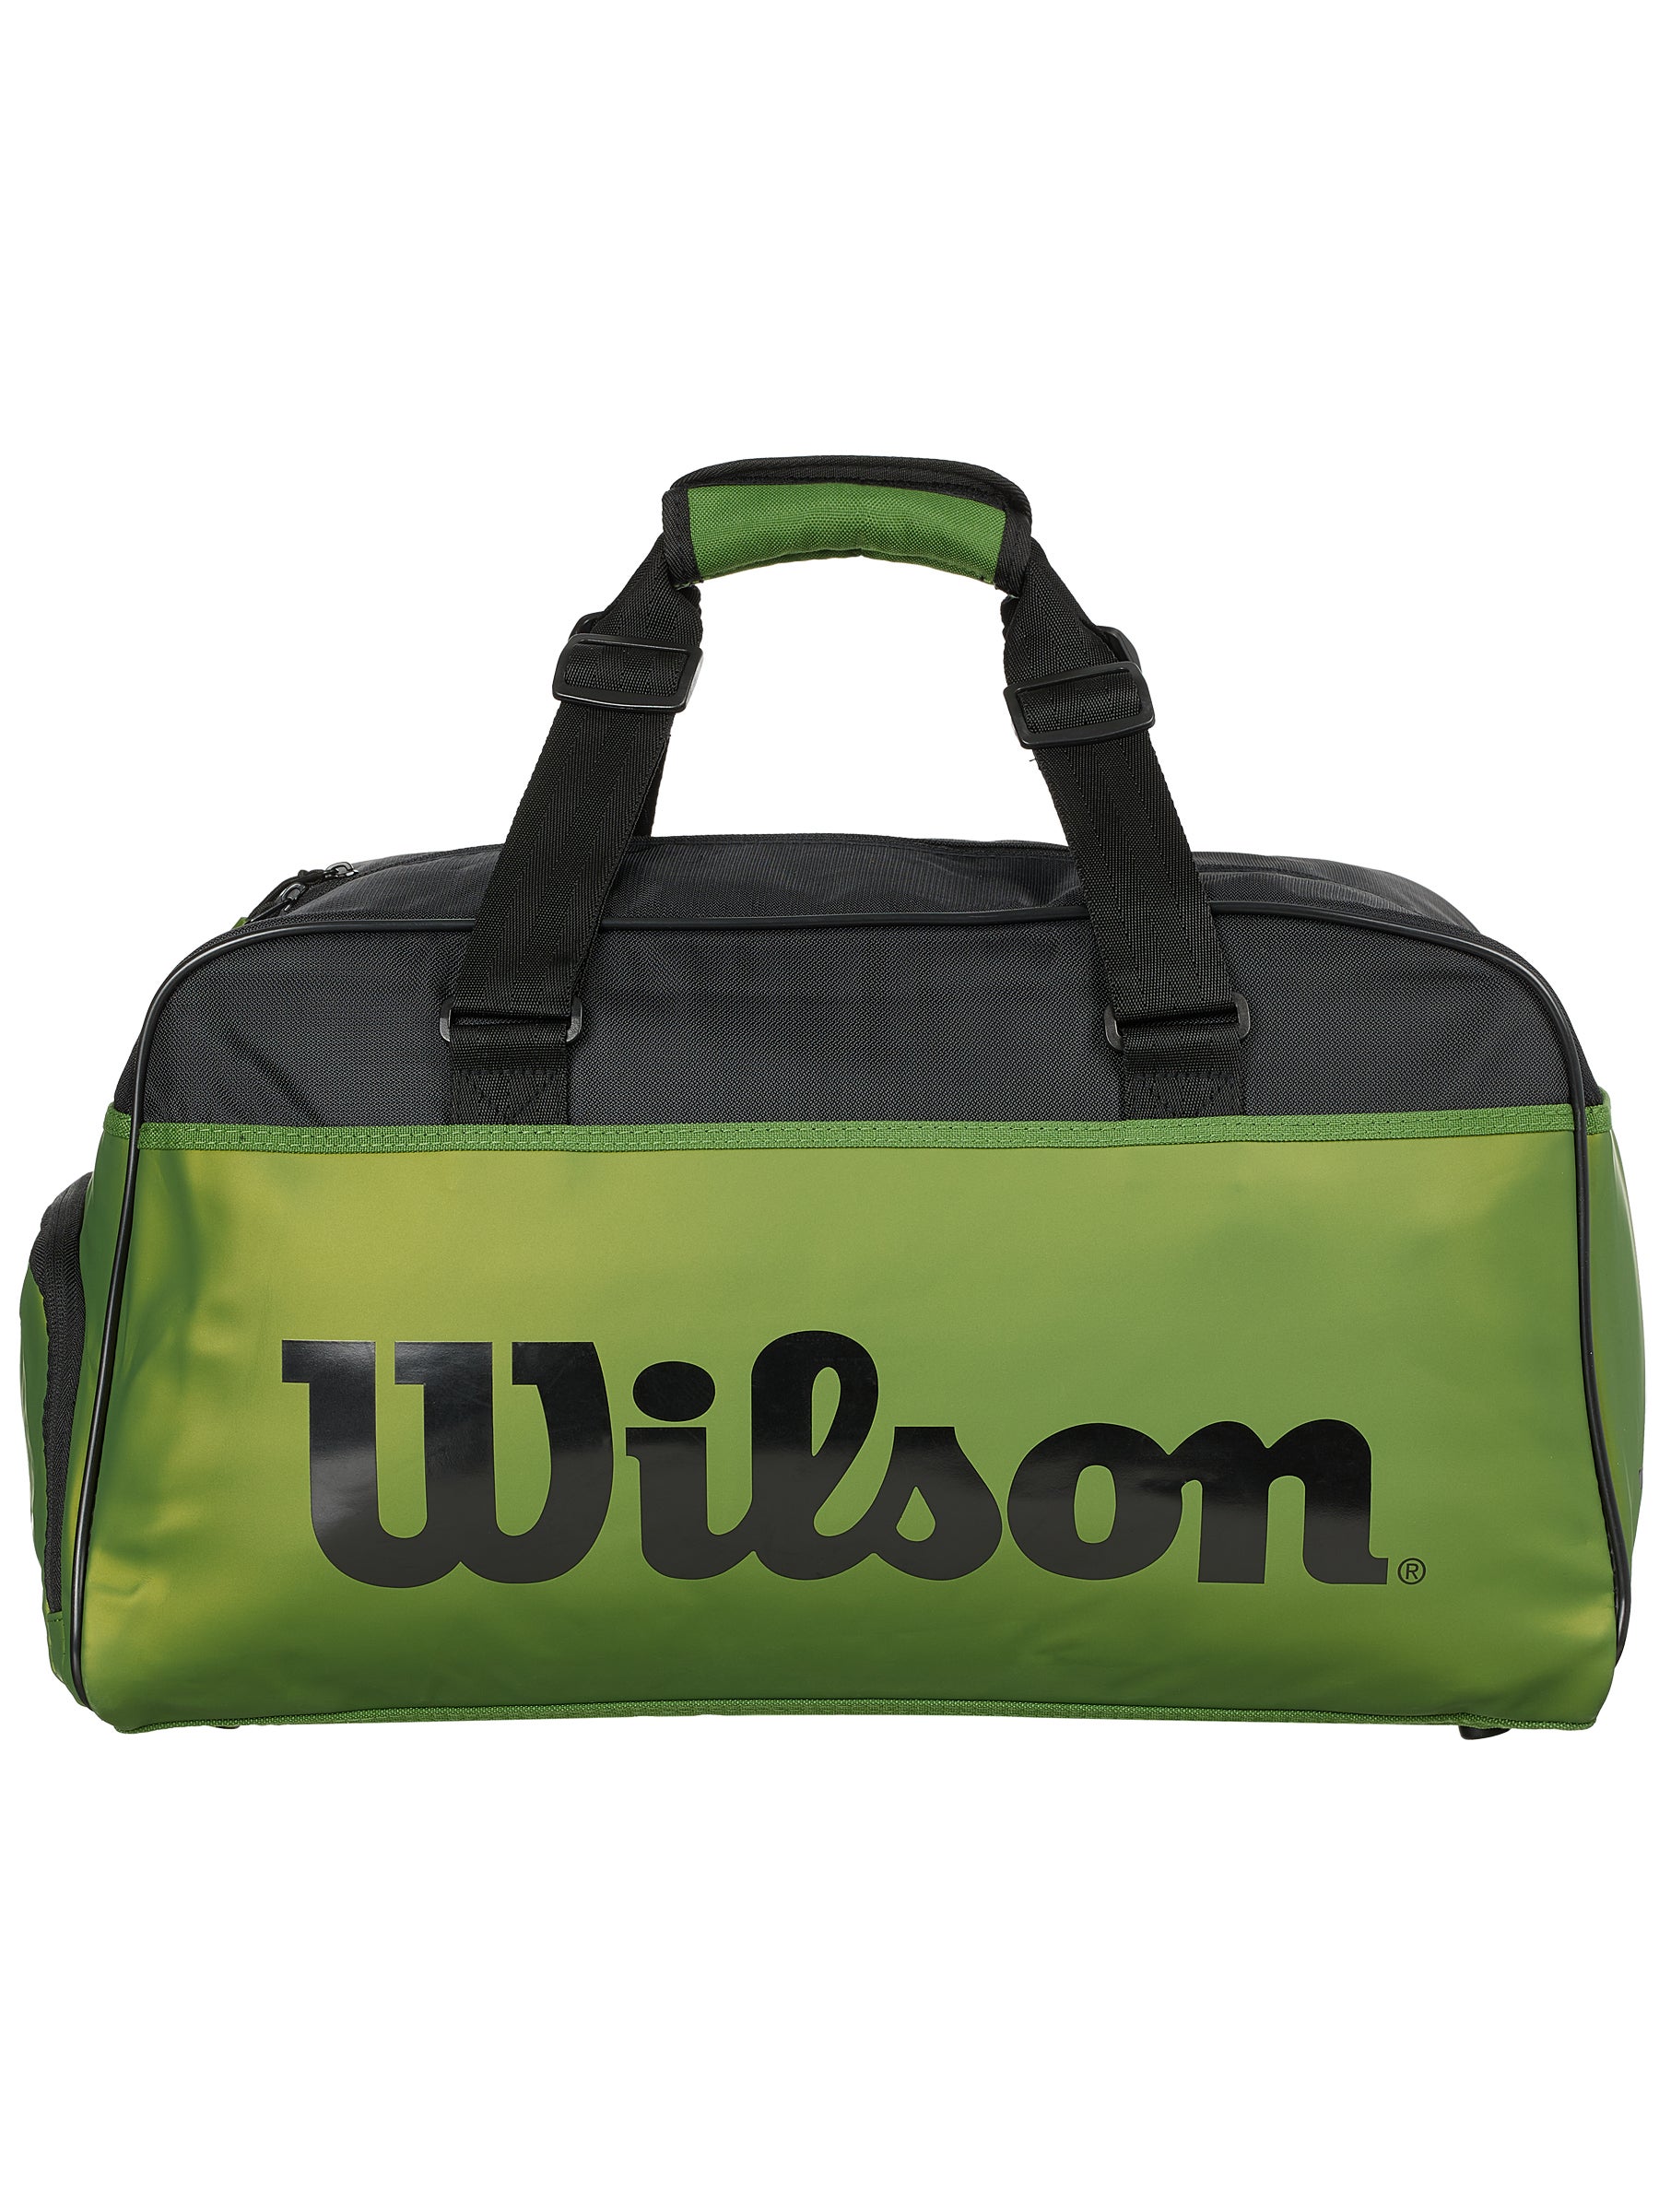 WILSON Clash Duffle Tennis Bag Unisex Adulto 